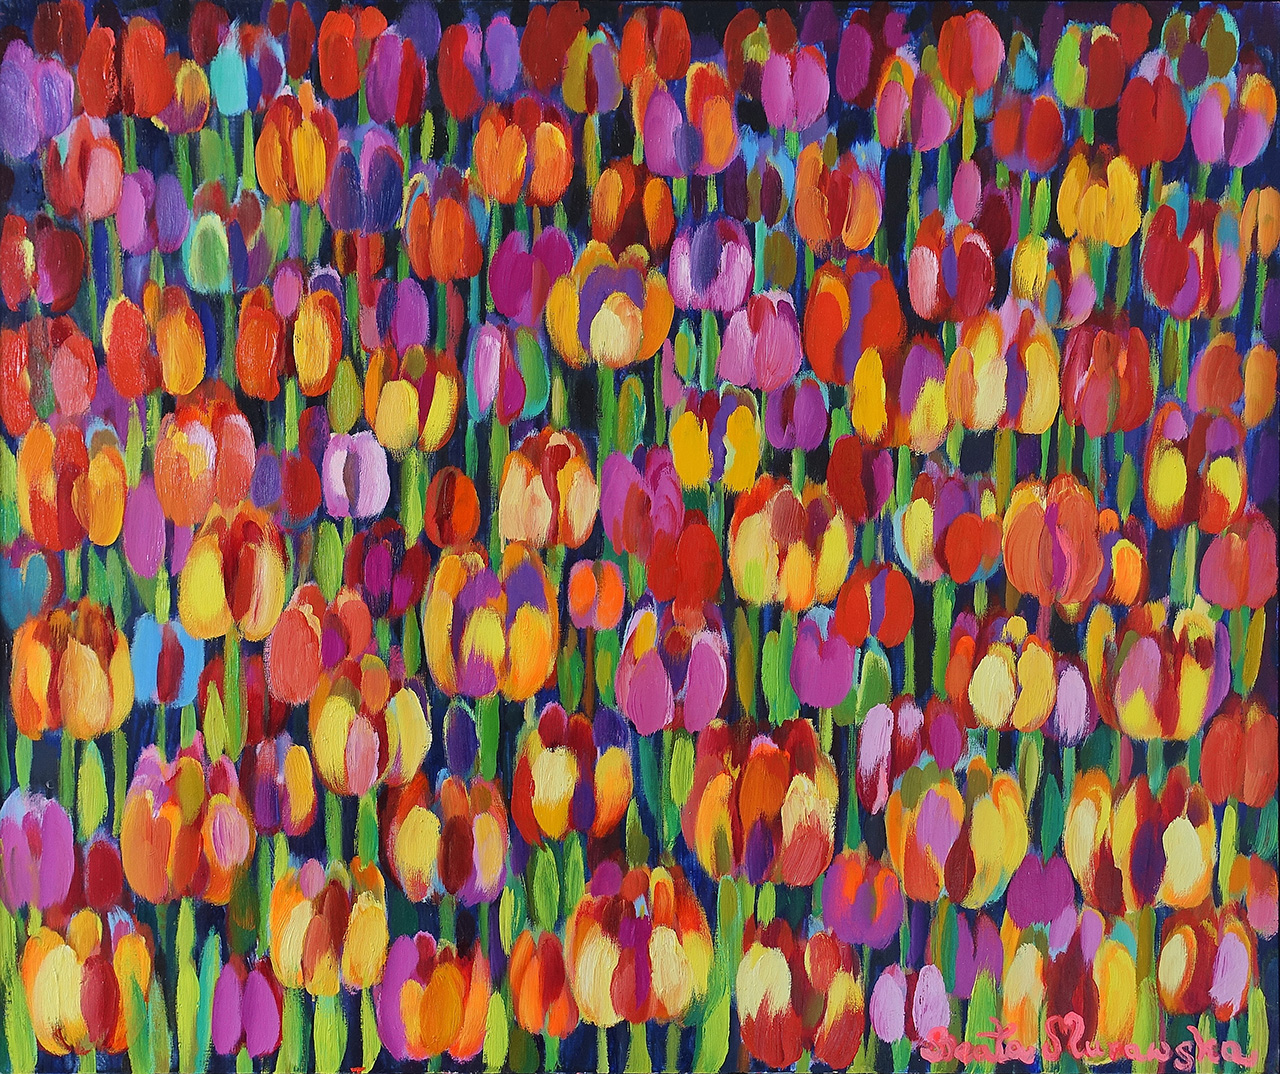 Beata Murawska - Notte dei tulipani (Oil on Canvas | Wymiary: 126 x 106 cm | Cena: 16000 PLN)